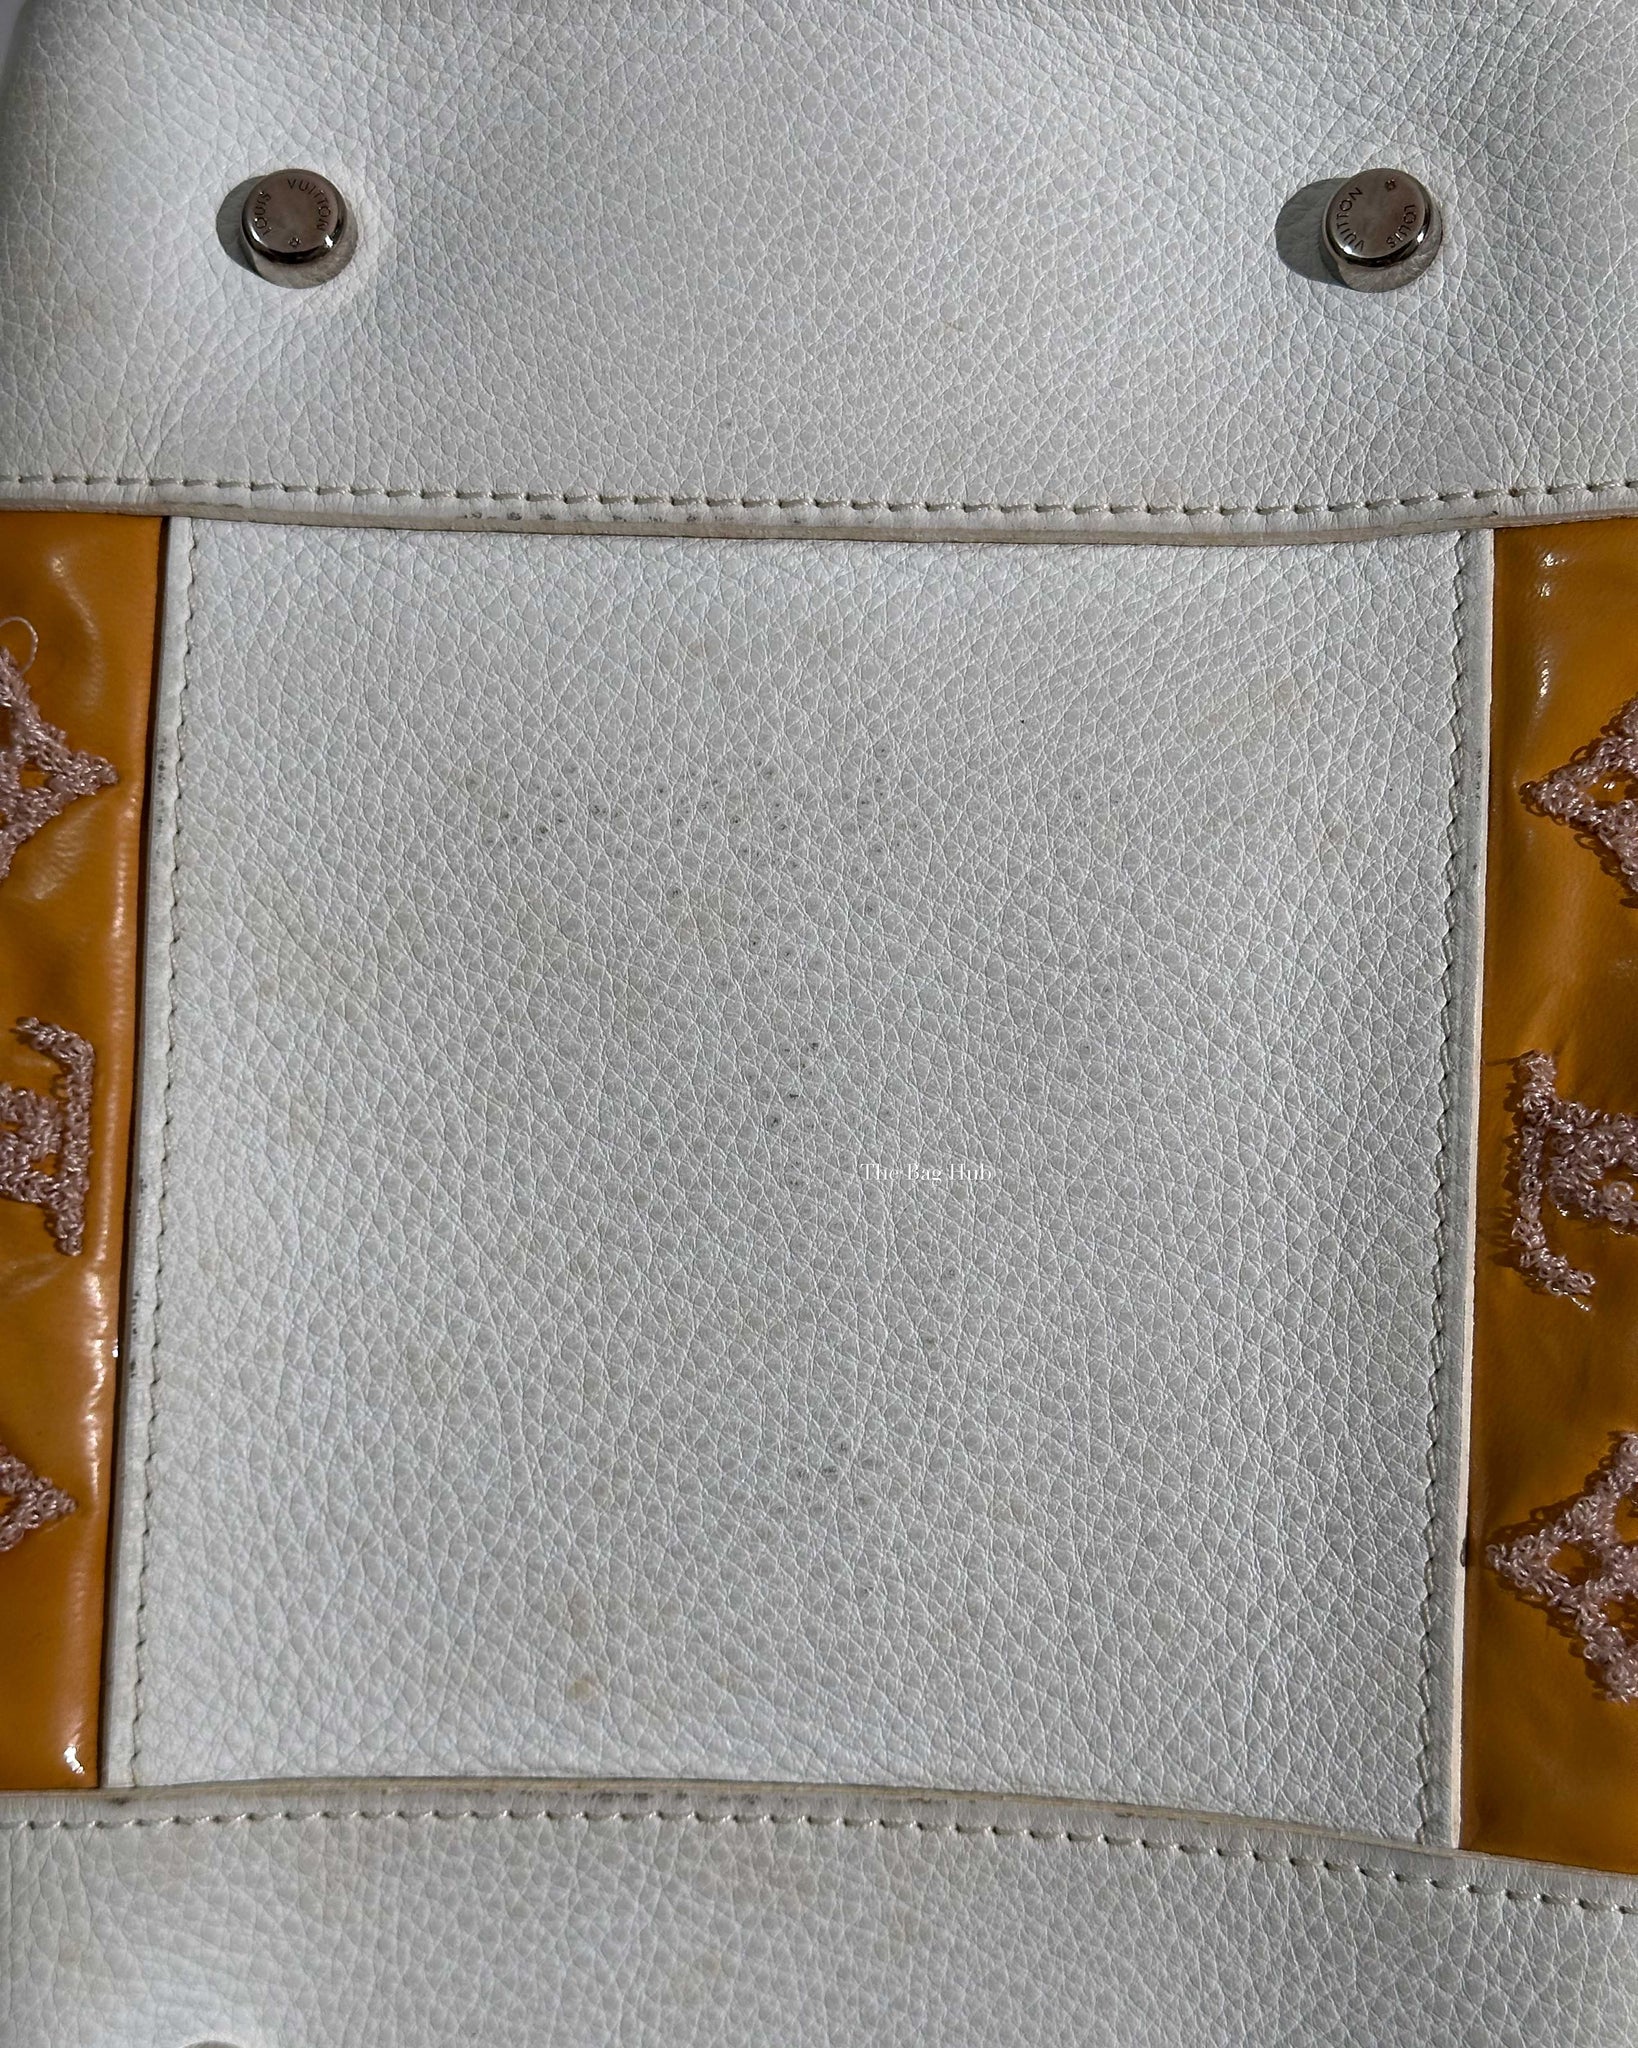 Louis Vuitton Orange/White Limited Edition Rose Monogram Bouclettes Speedy Round Bag